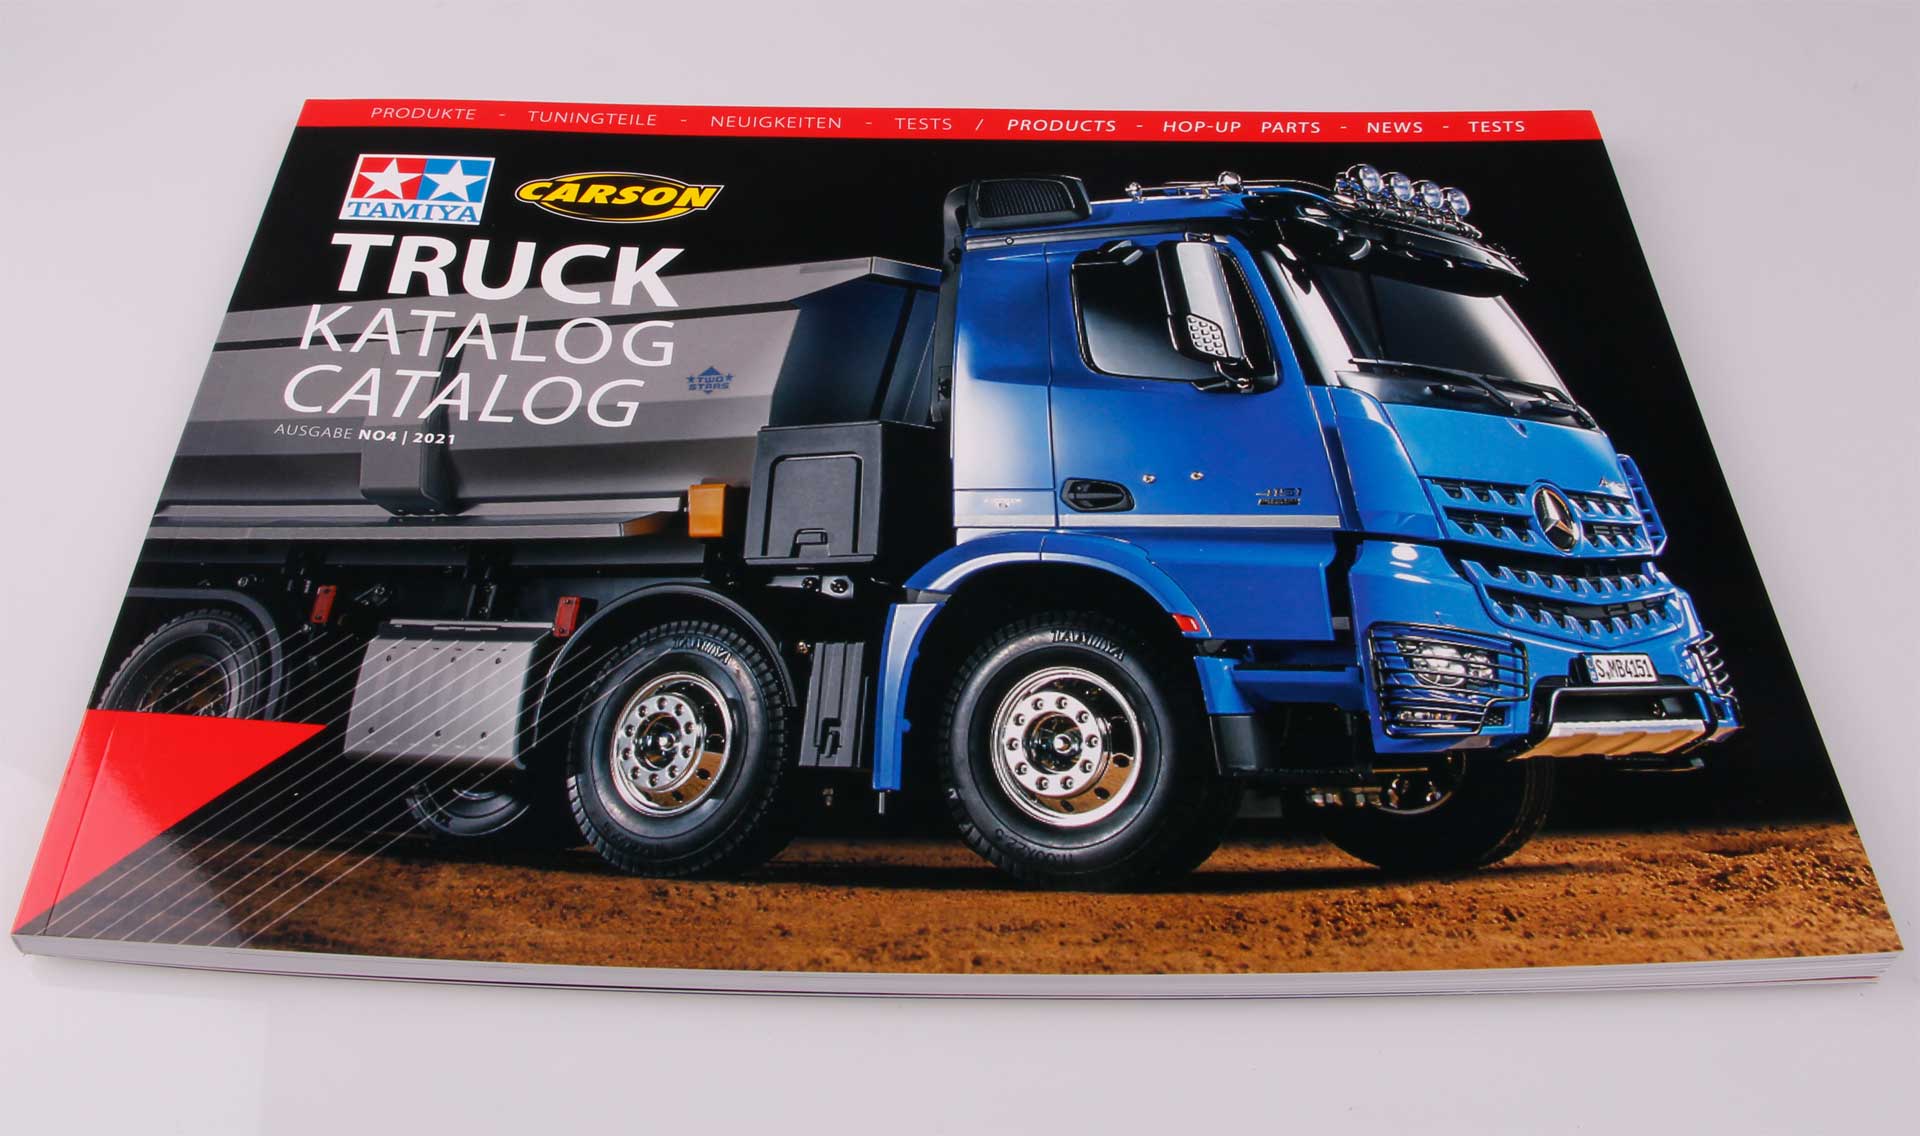 Truck Katalog Vol.4 Tamiya/Carson